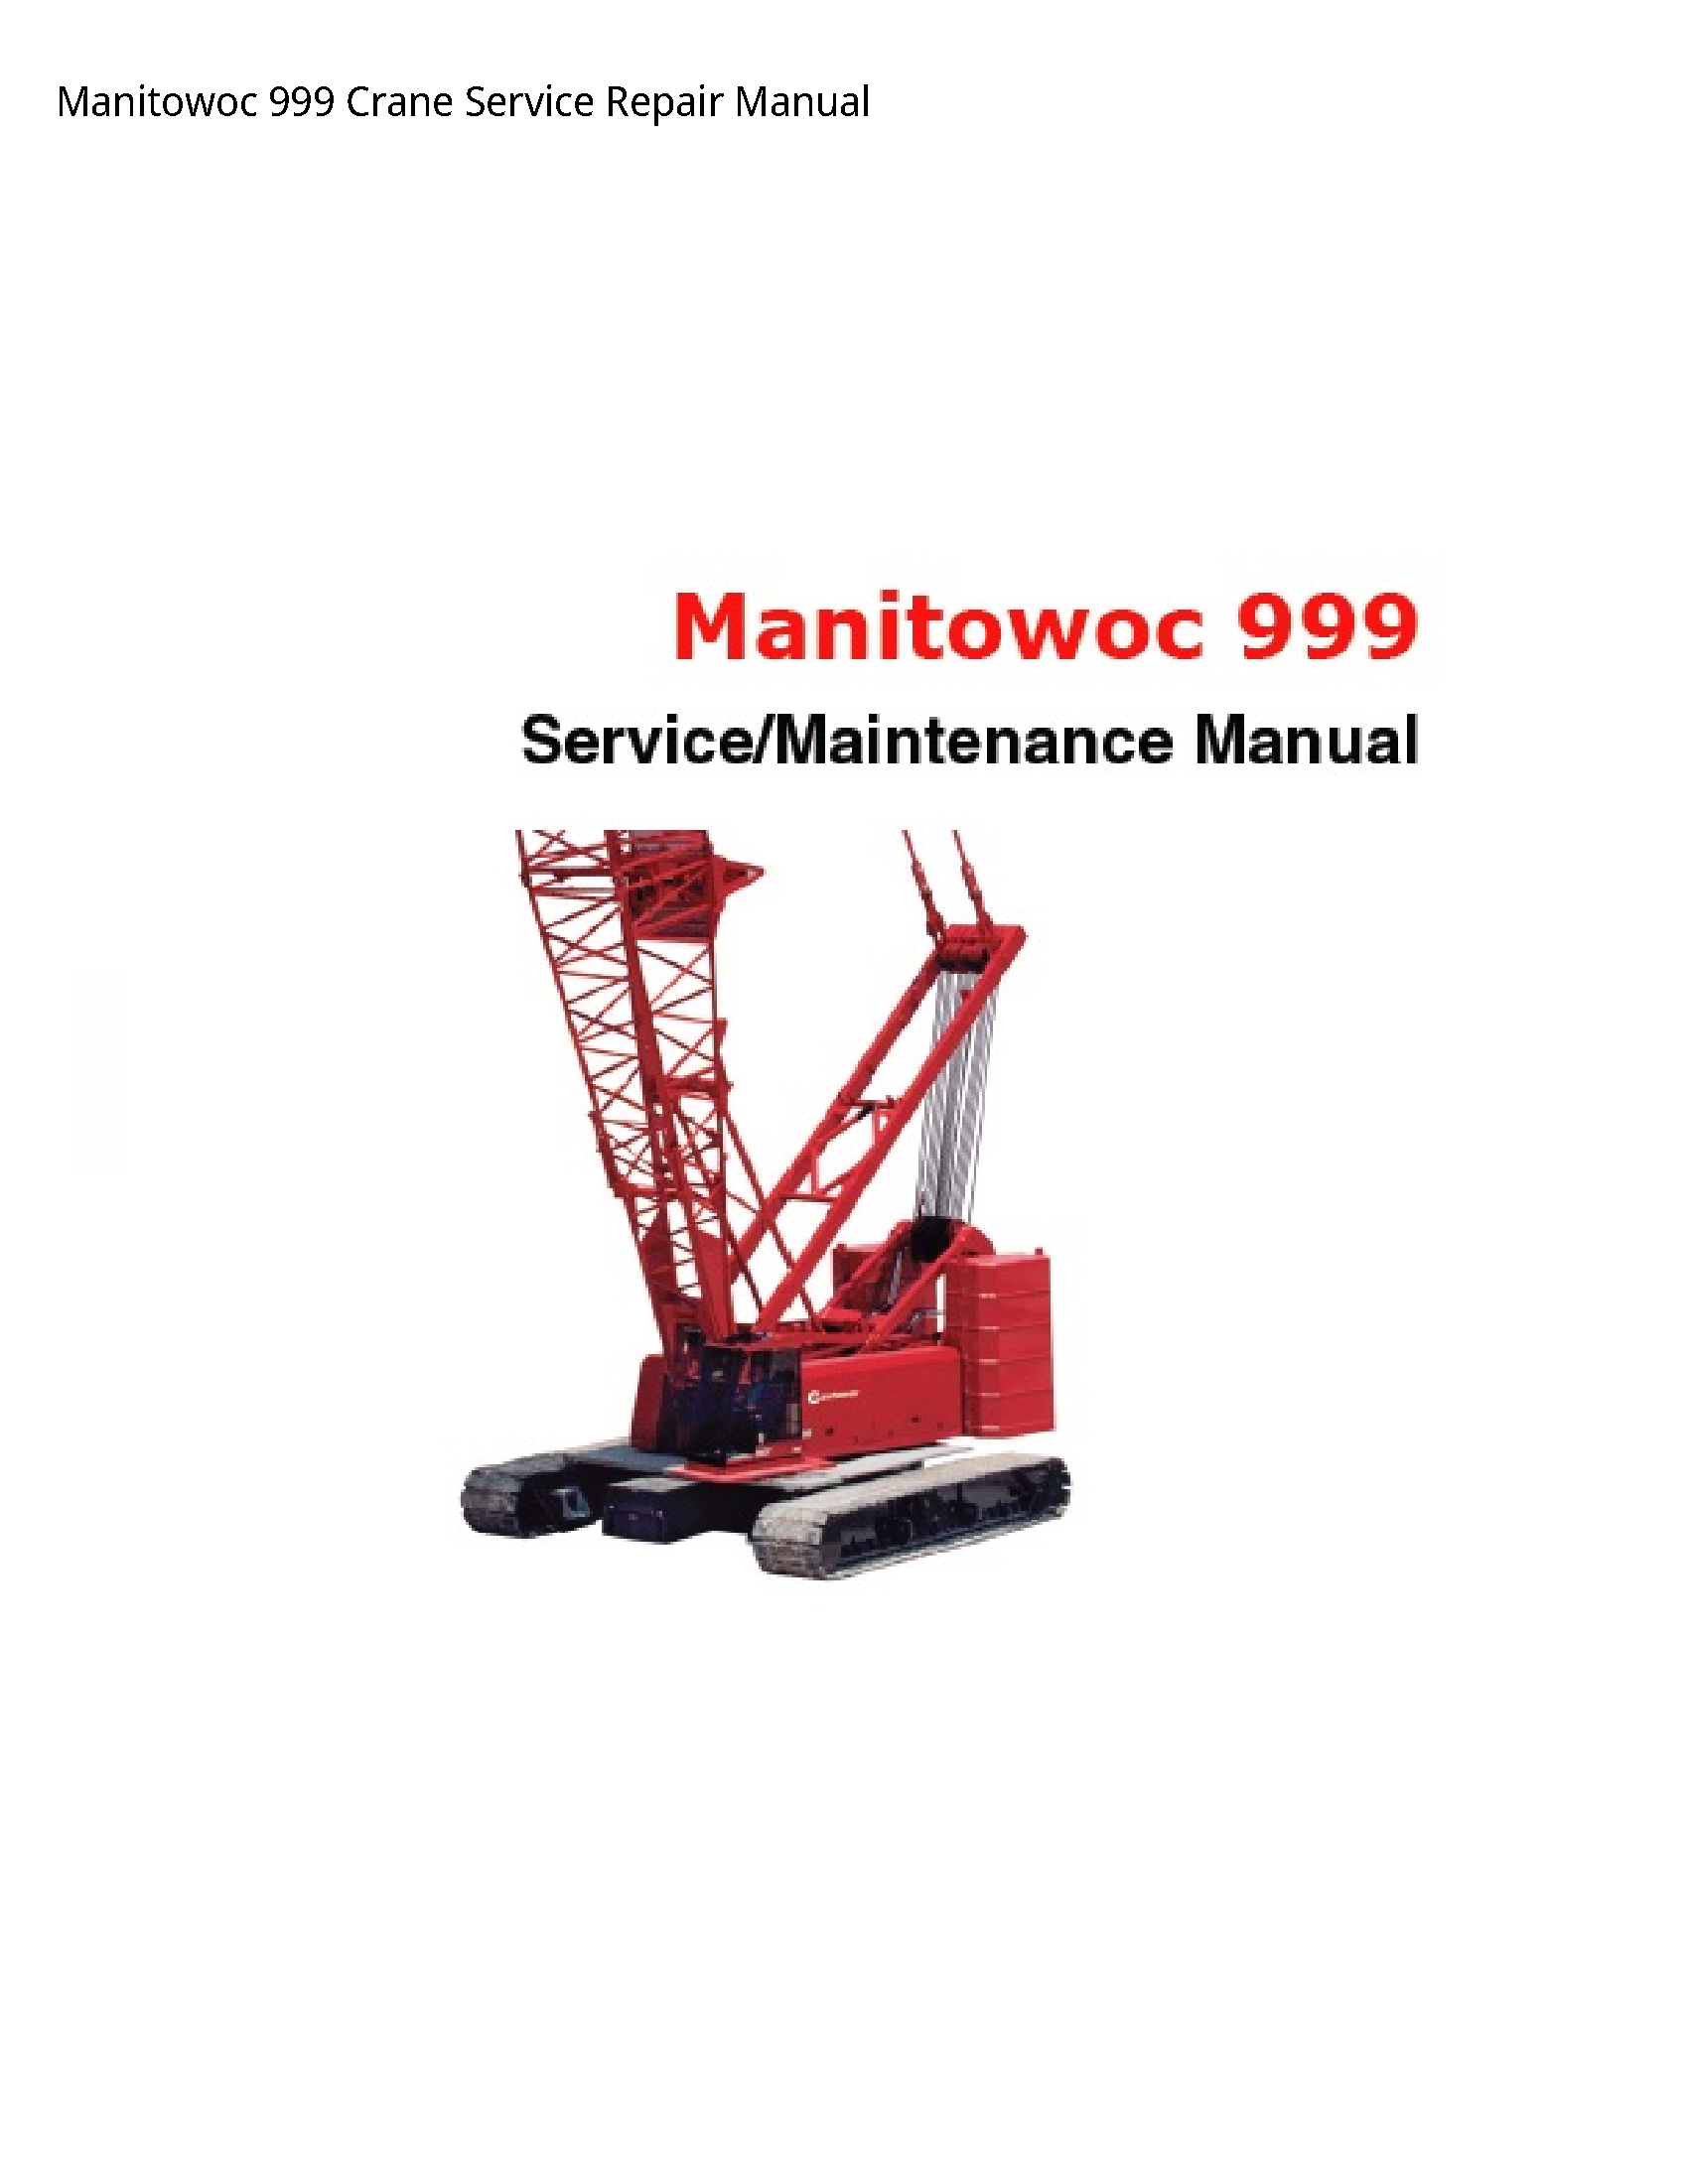 Manitowoc 999 Crane manual